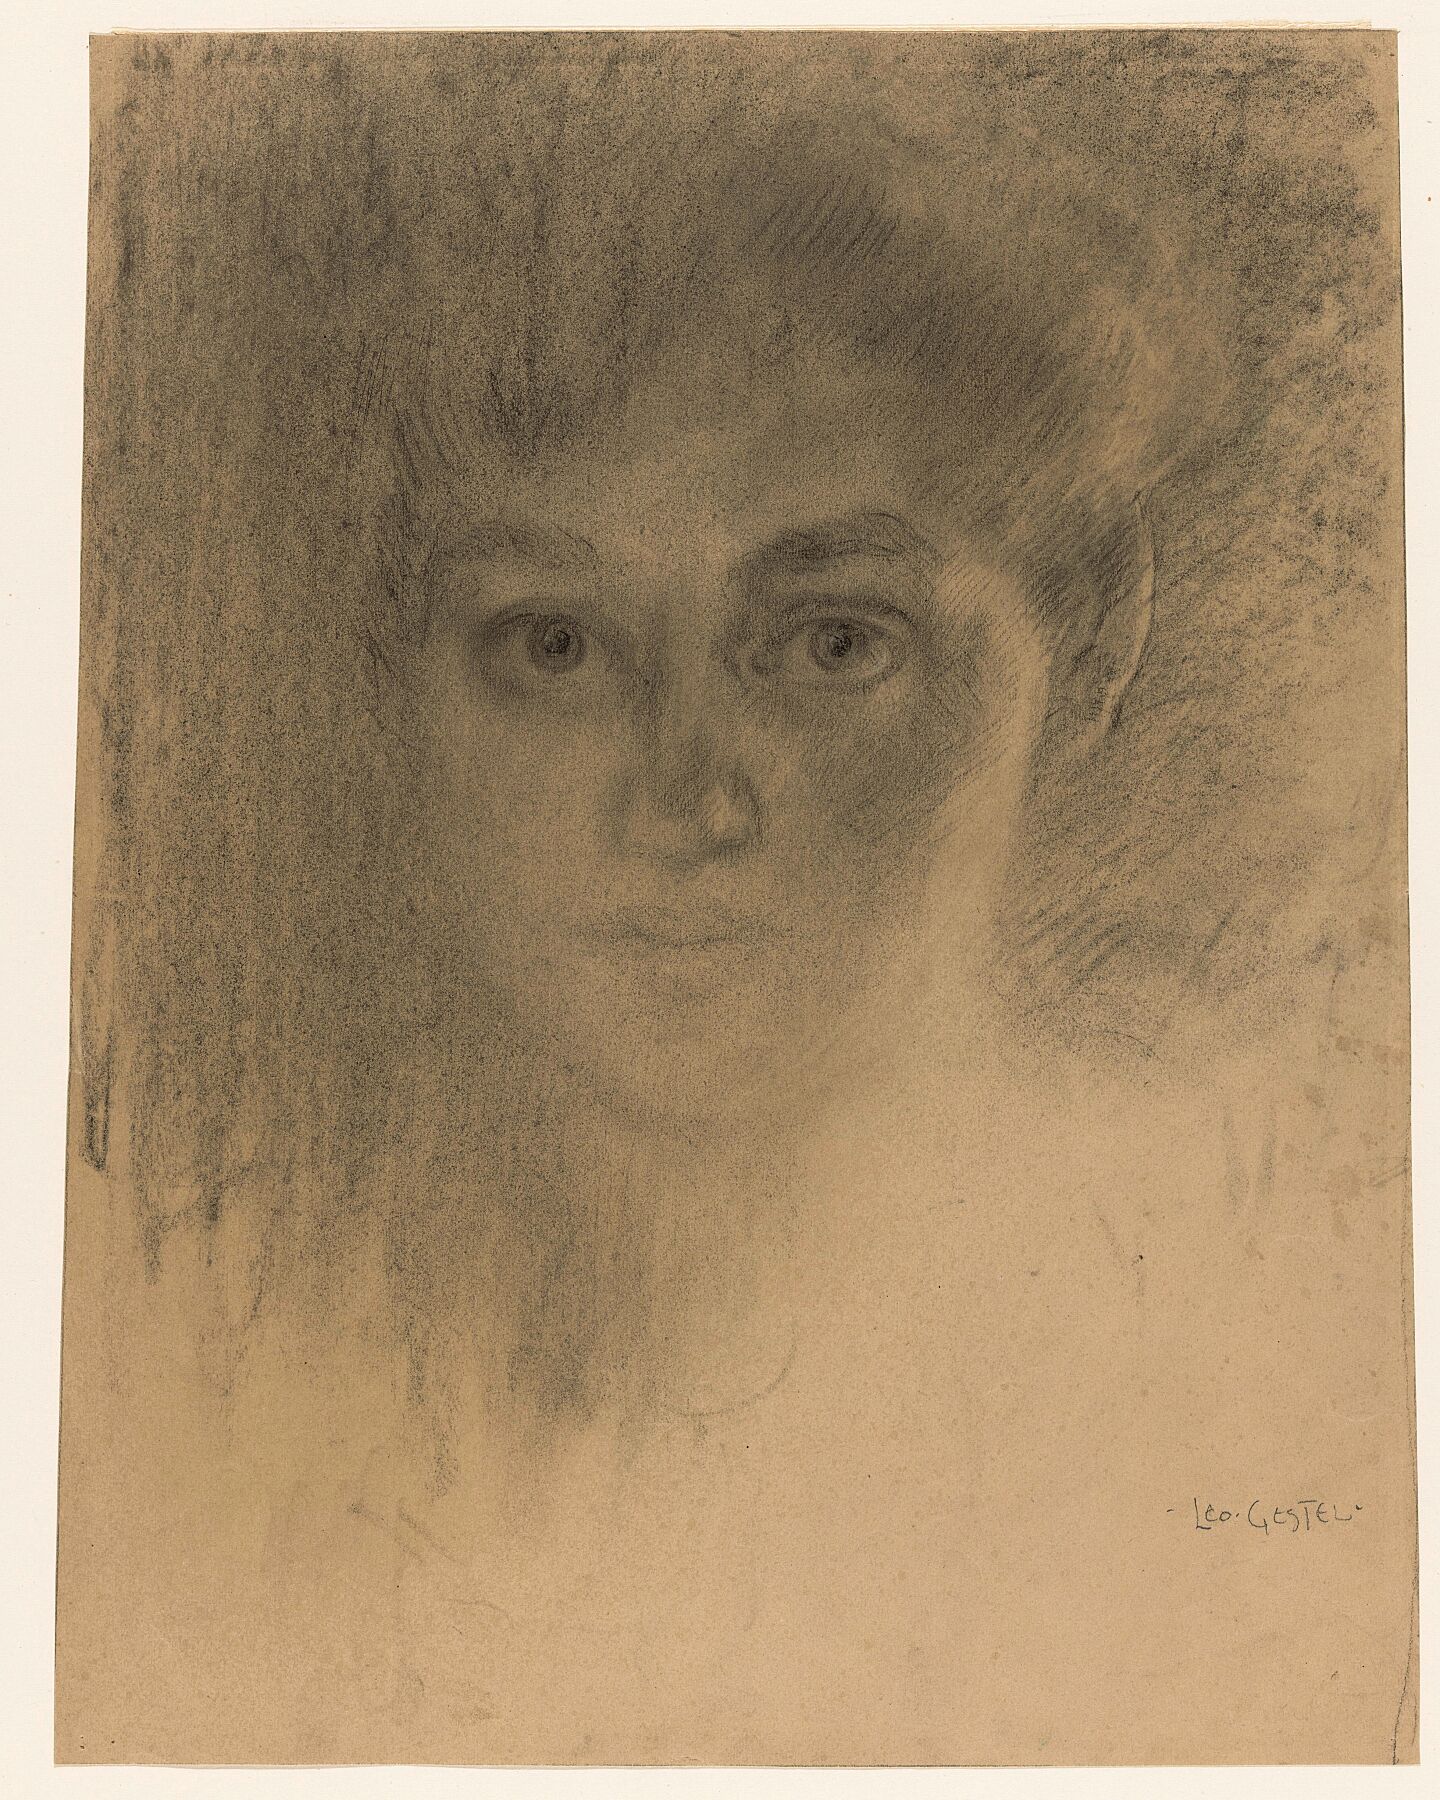 Face of a woman, Leo Gestel, 1891 - 1941